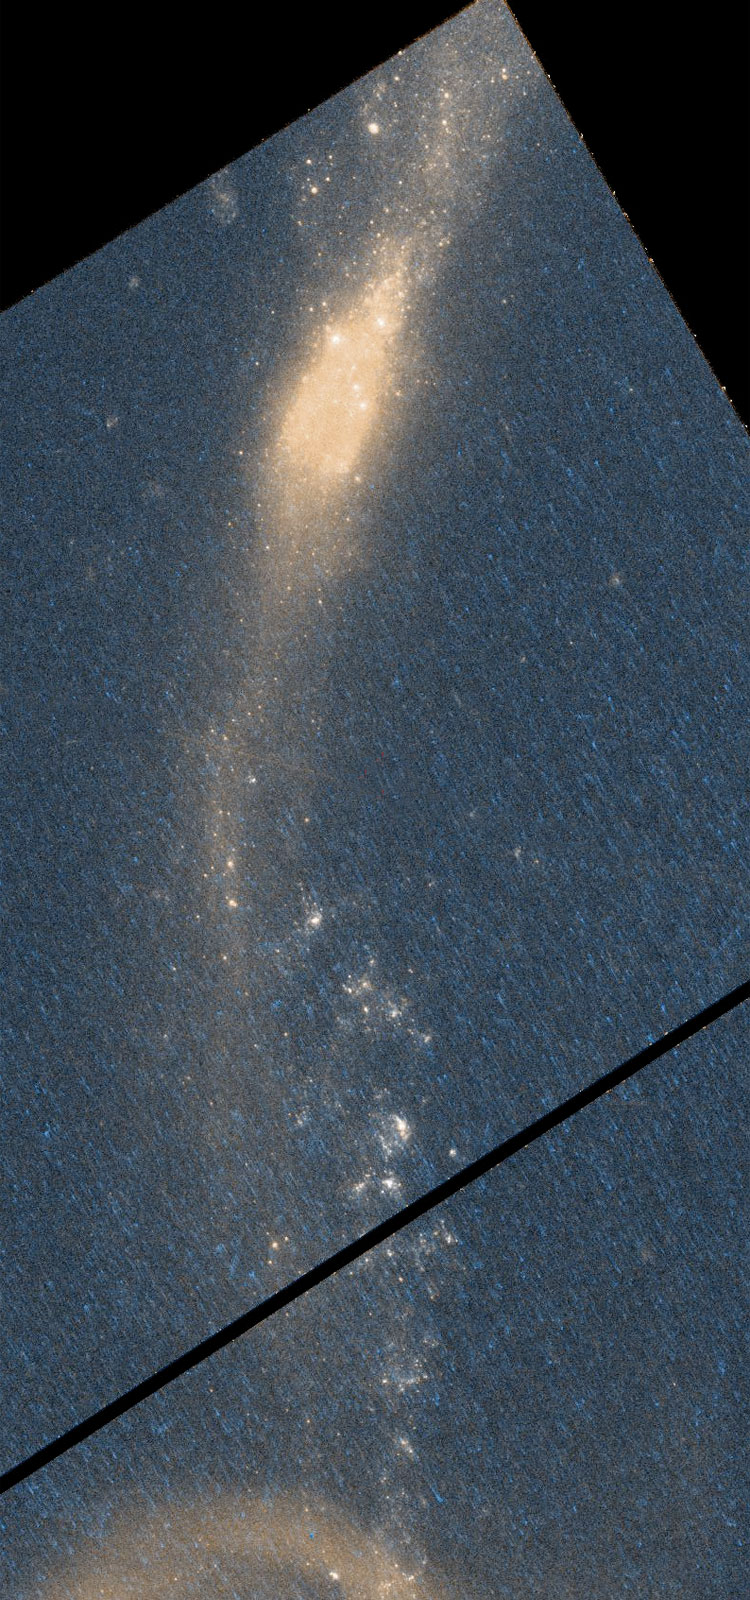 'Raw' HST image of irregular galaxy NGC 7715